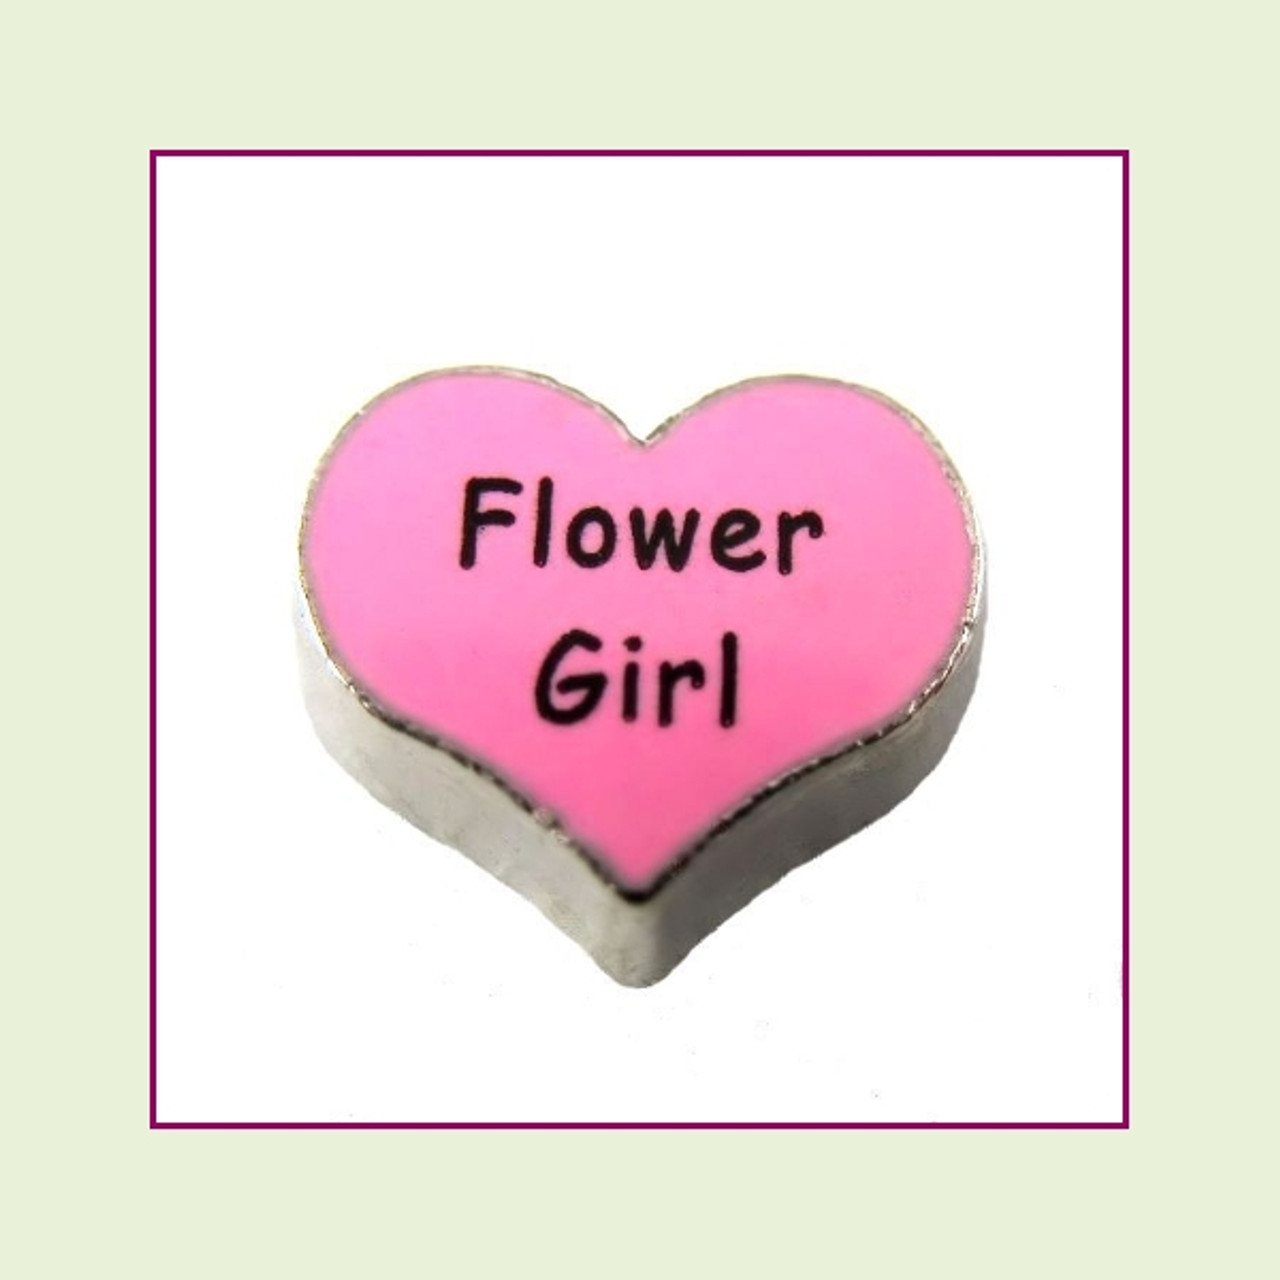 Flower Girl on Pink Heart (Silver Base) Floating Charm